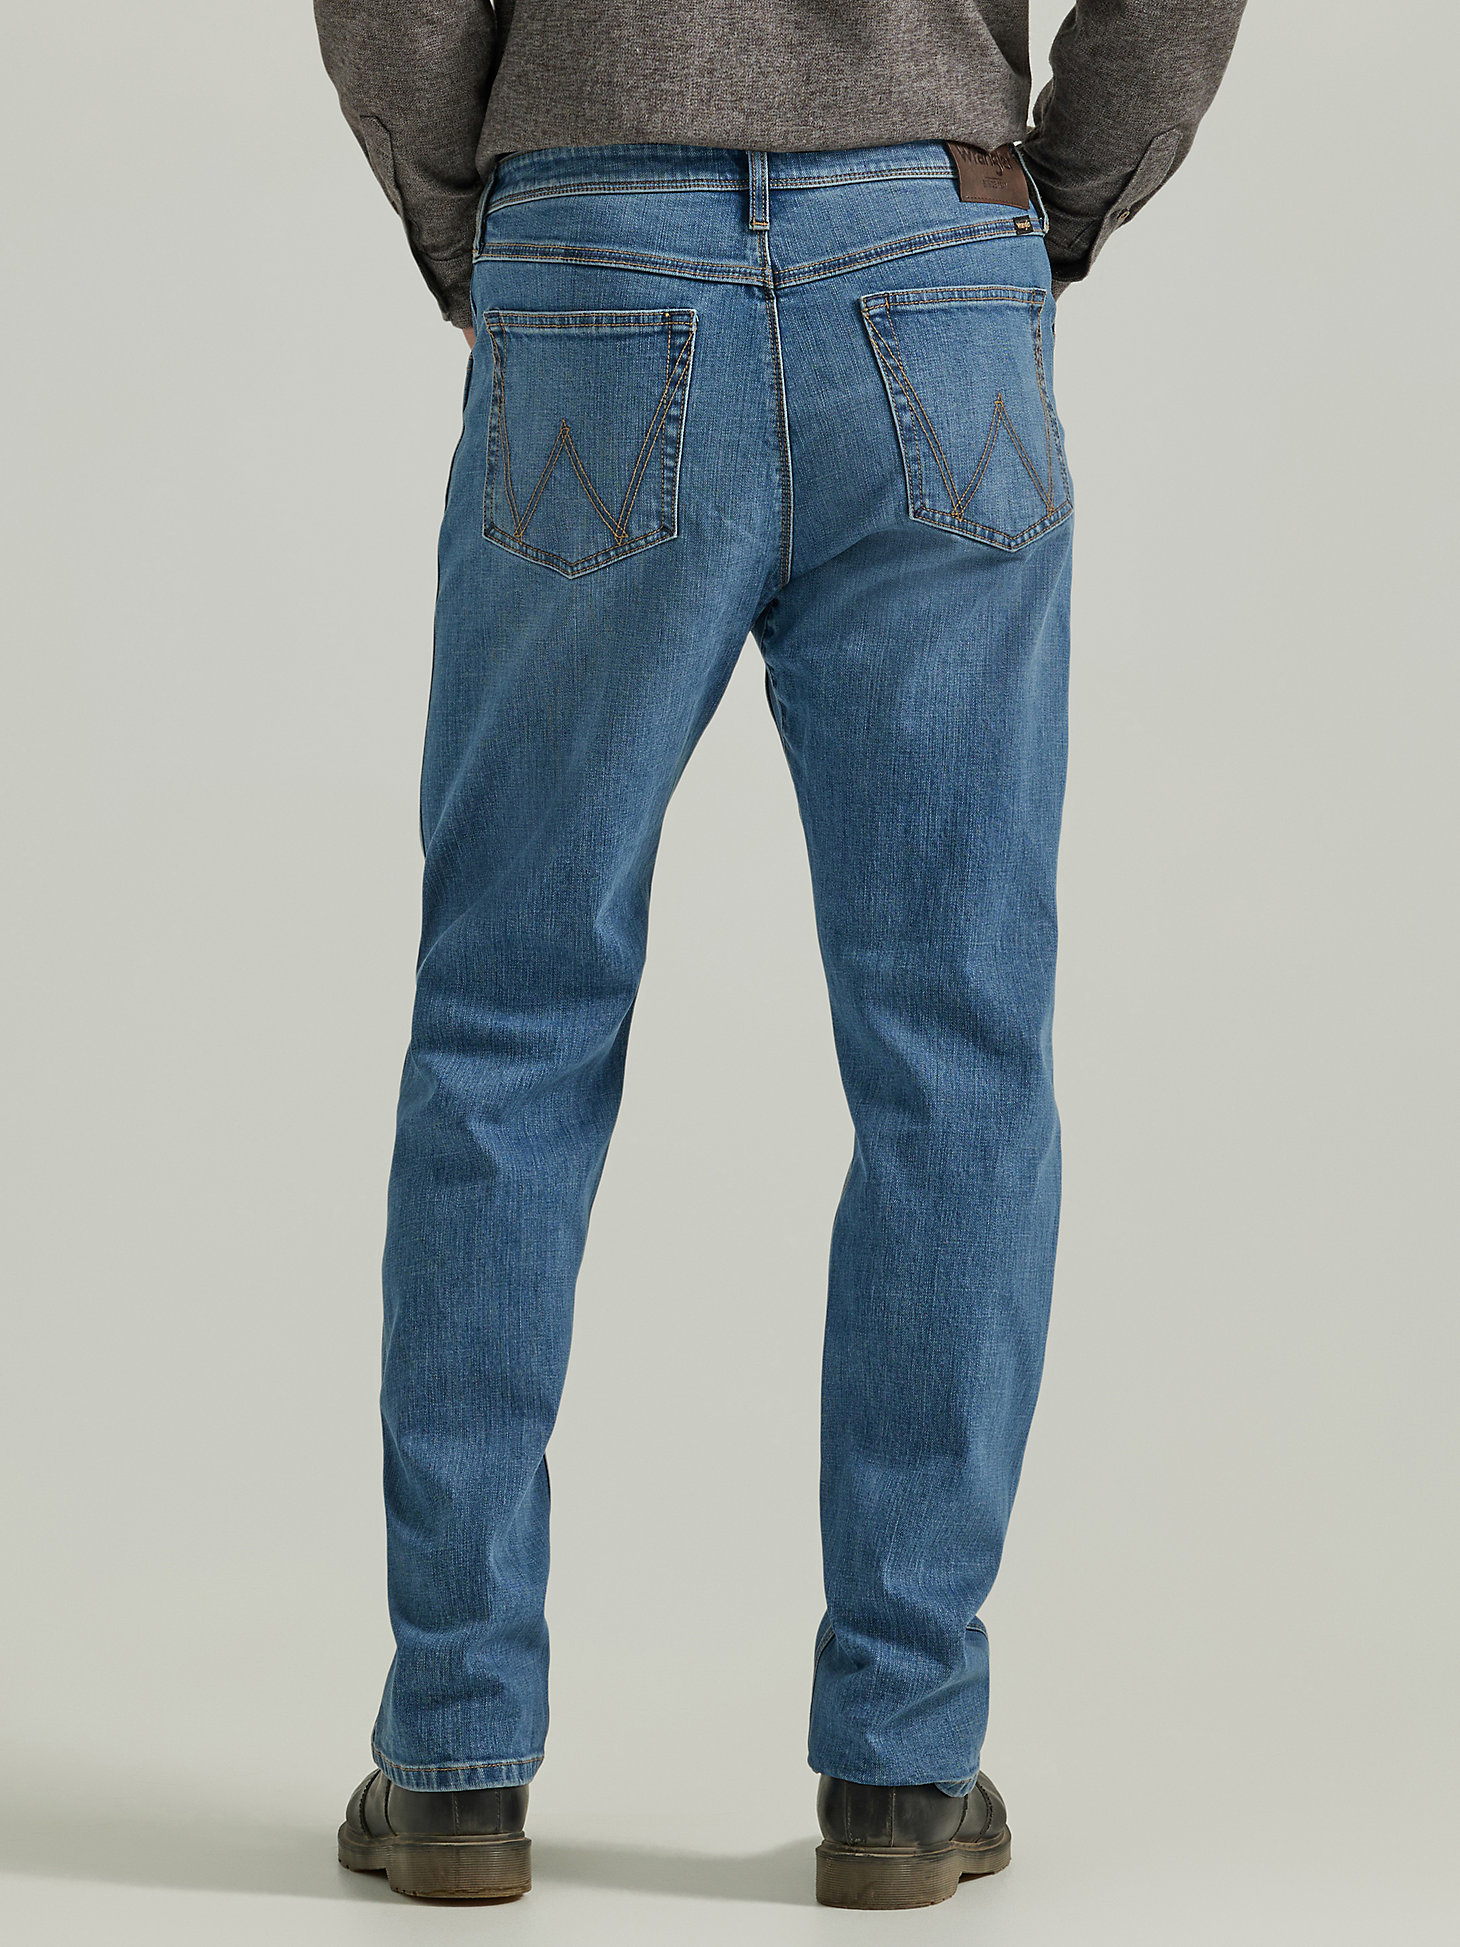 Men's Comfort That Won't Quit Regular Fit Jean in Medium Blue alternative view 1